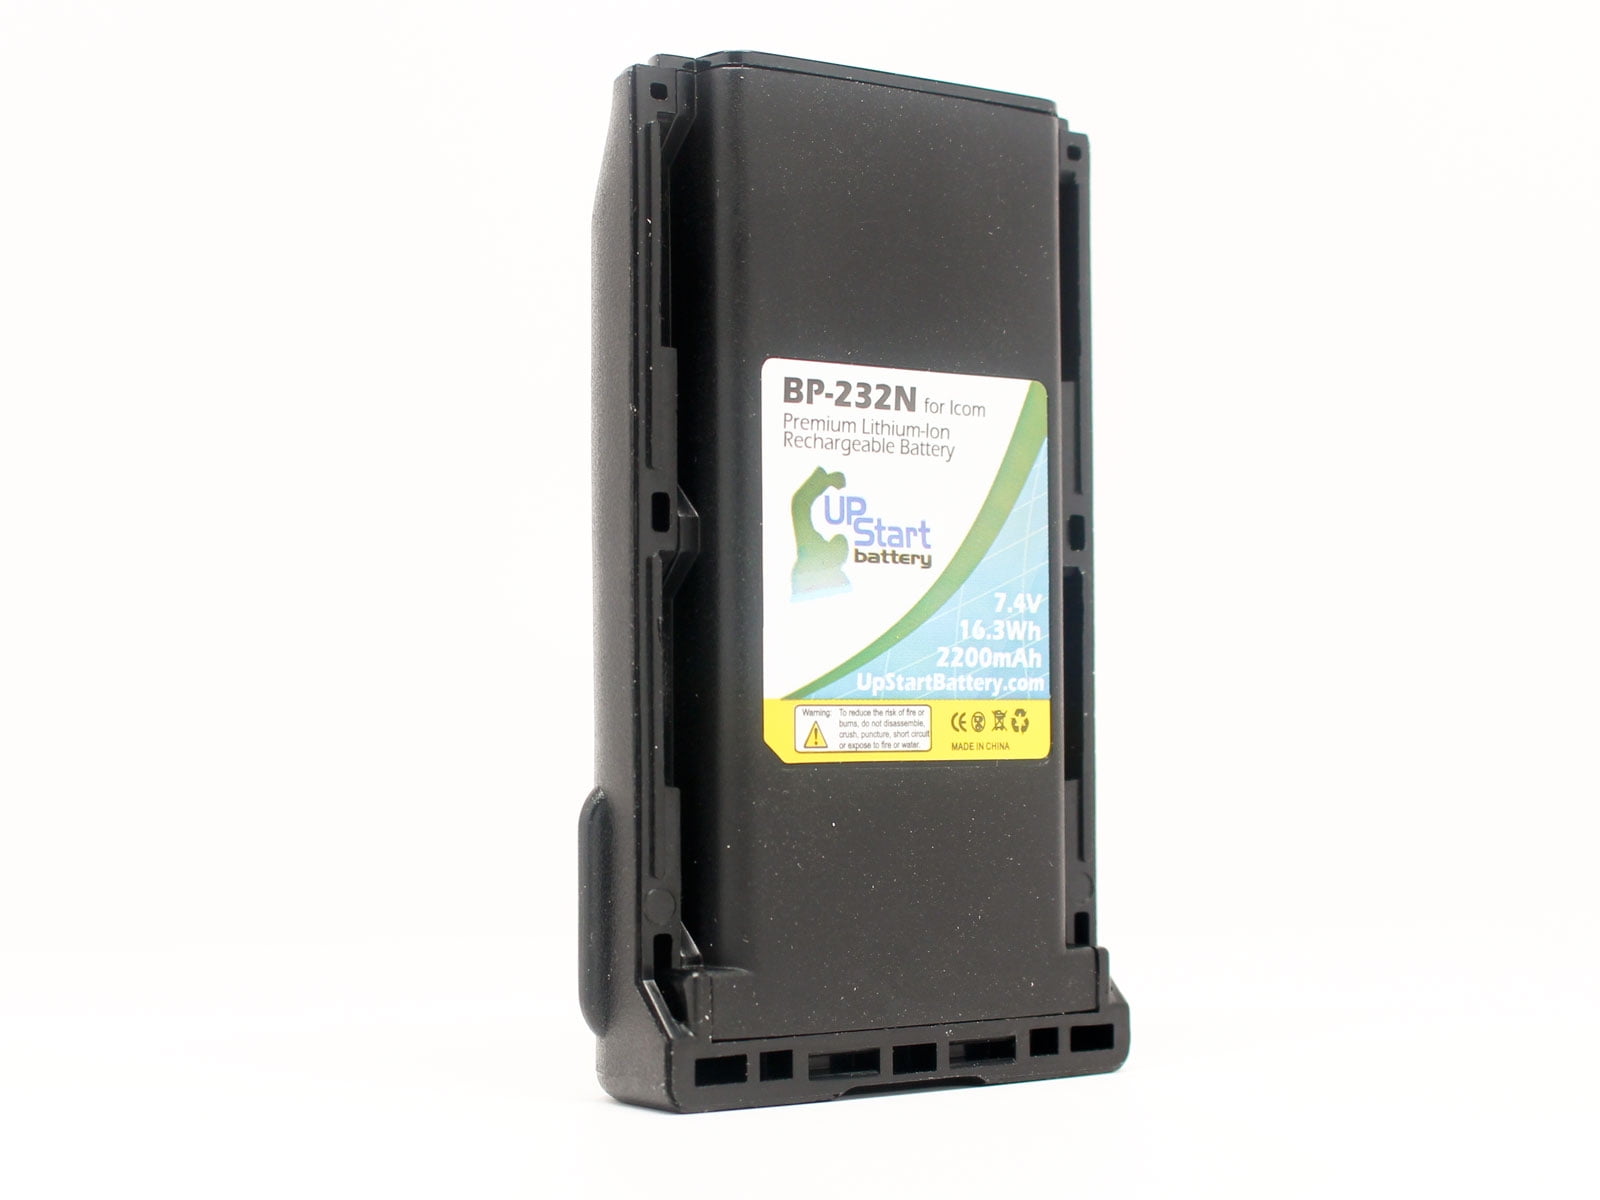 Bolsa muy Industrial Icom IC-A14 Battery - Replacement for Icom BP232N Two-Way Radio Battery  (2200mAh, 7.4V, Lithium-Ion) - Walmart.com